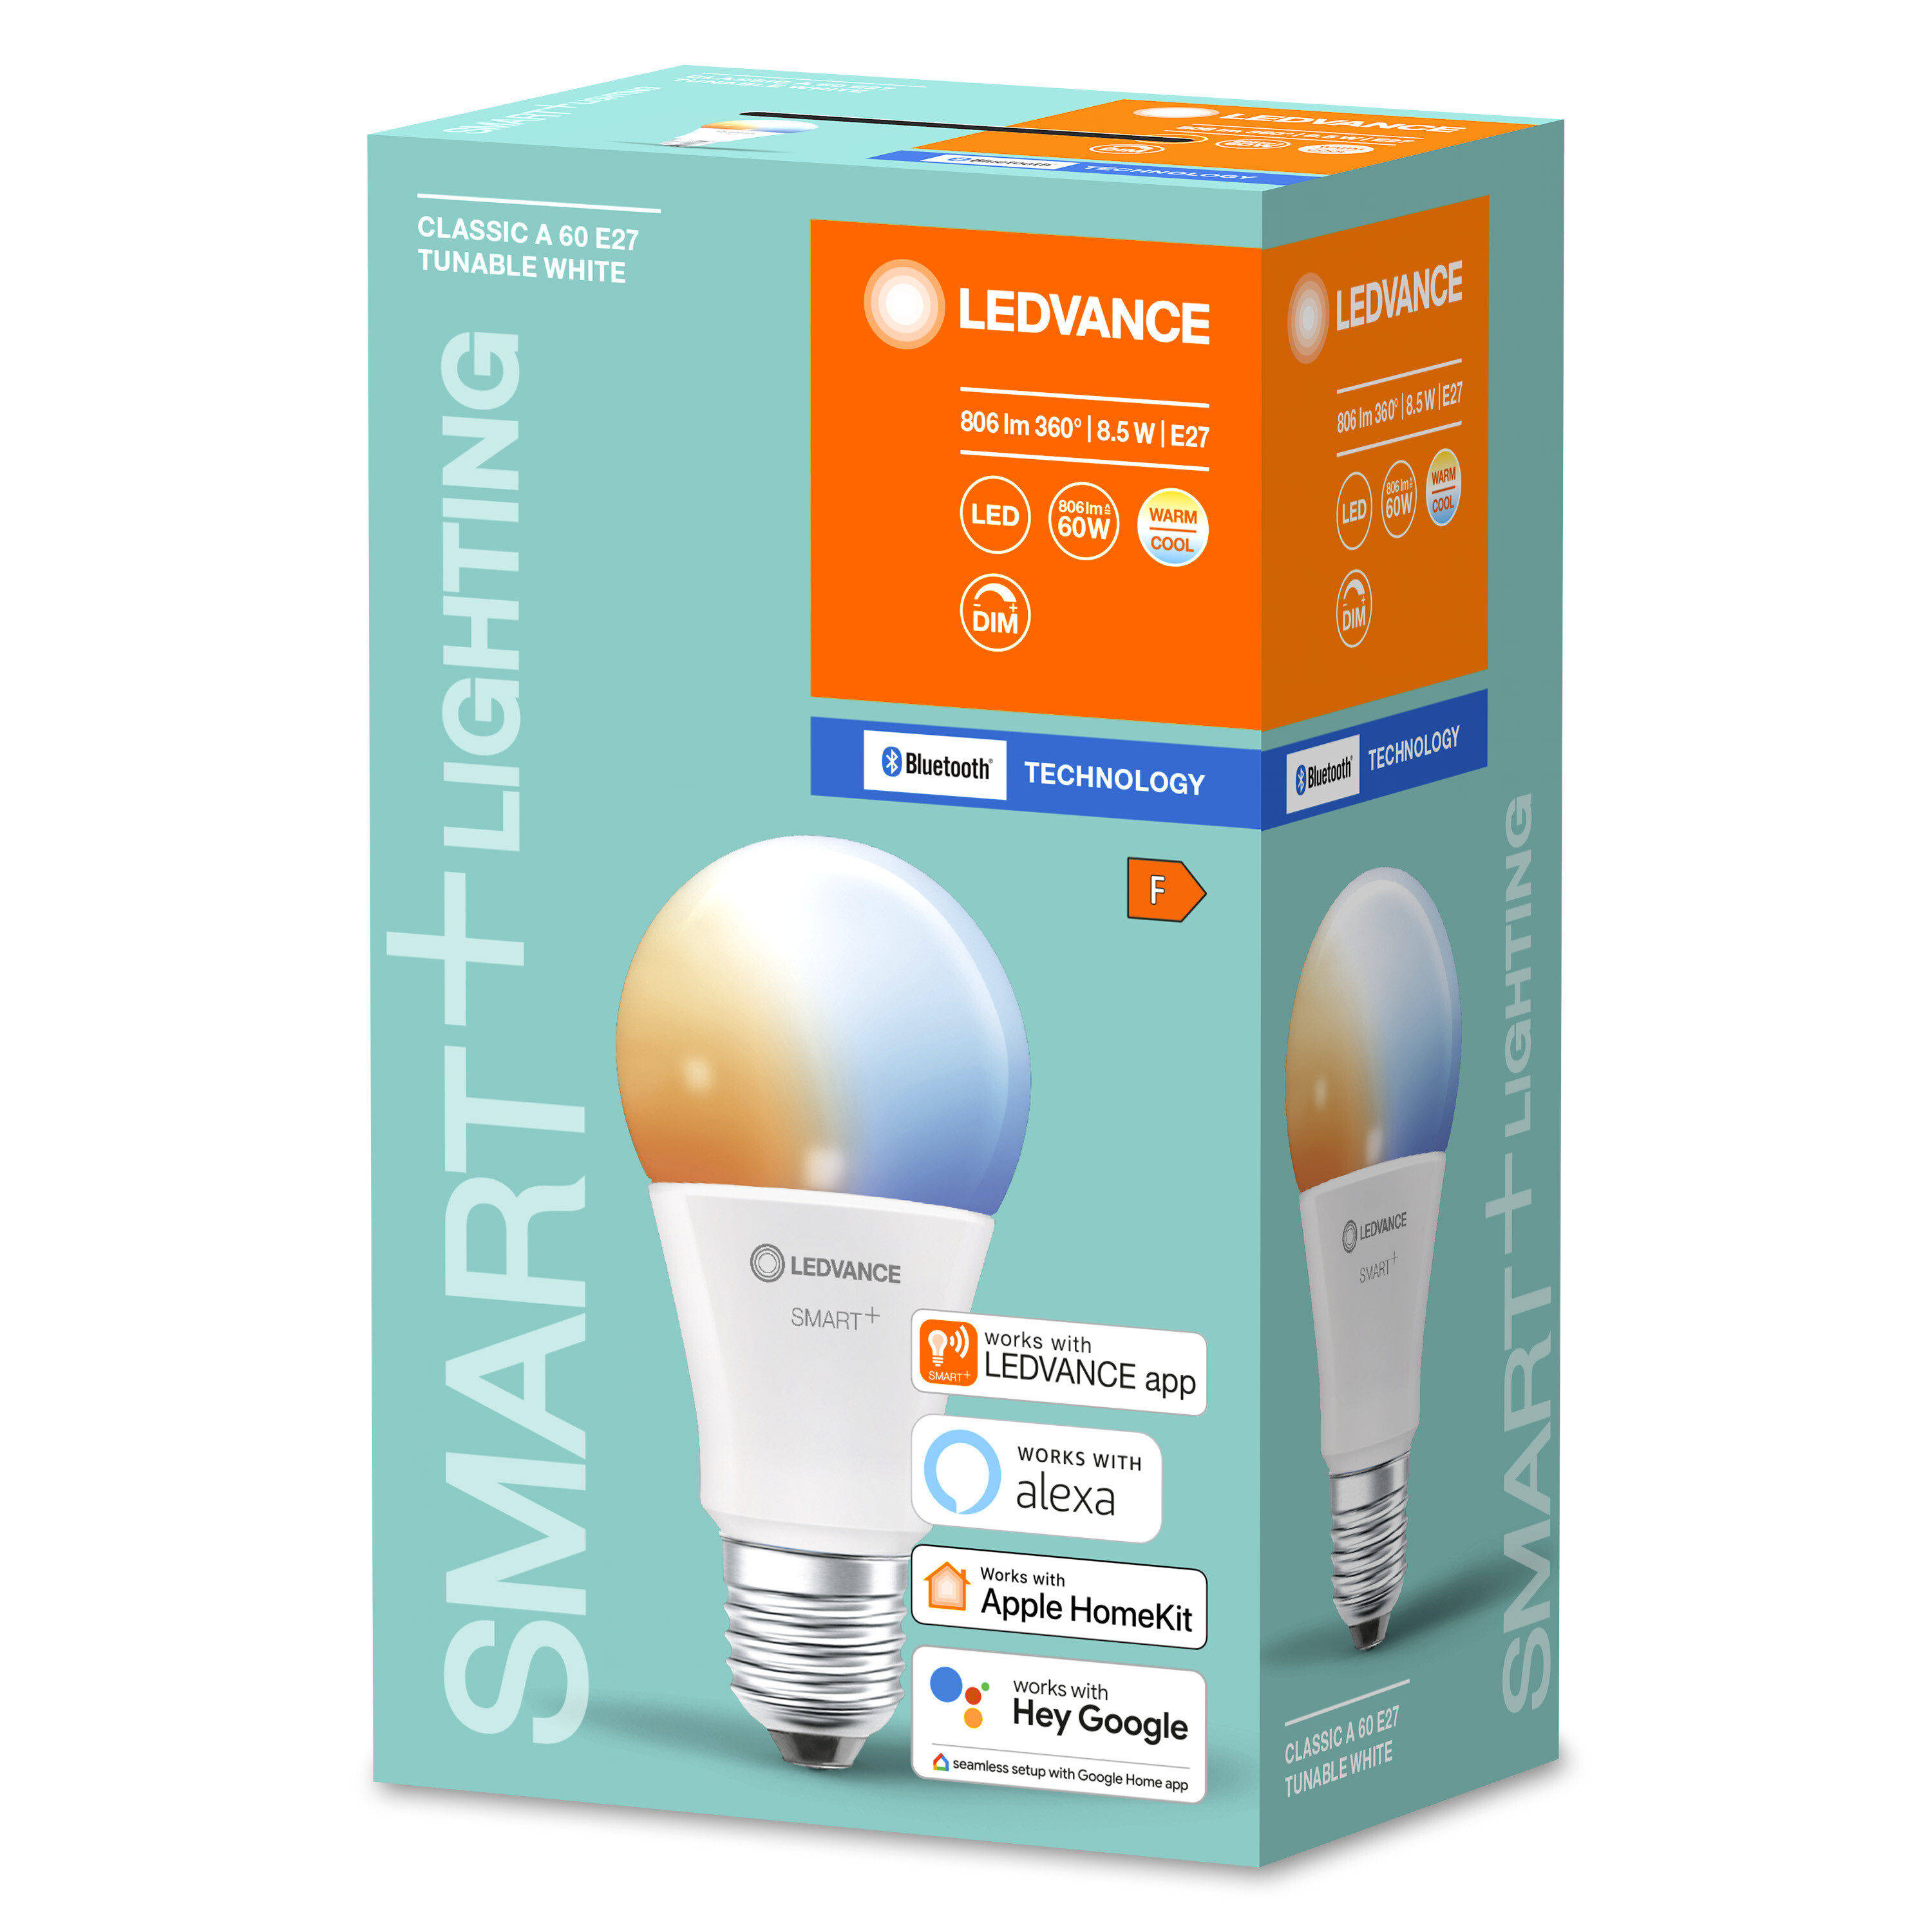 Lichtfarbe änderbar LED LEDVANCE SMART+ Lampe Tunable White Classic